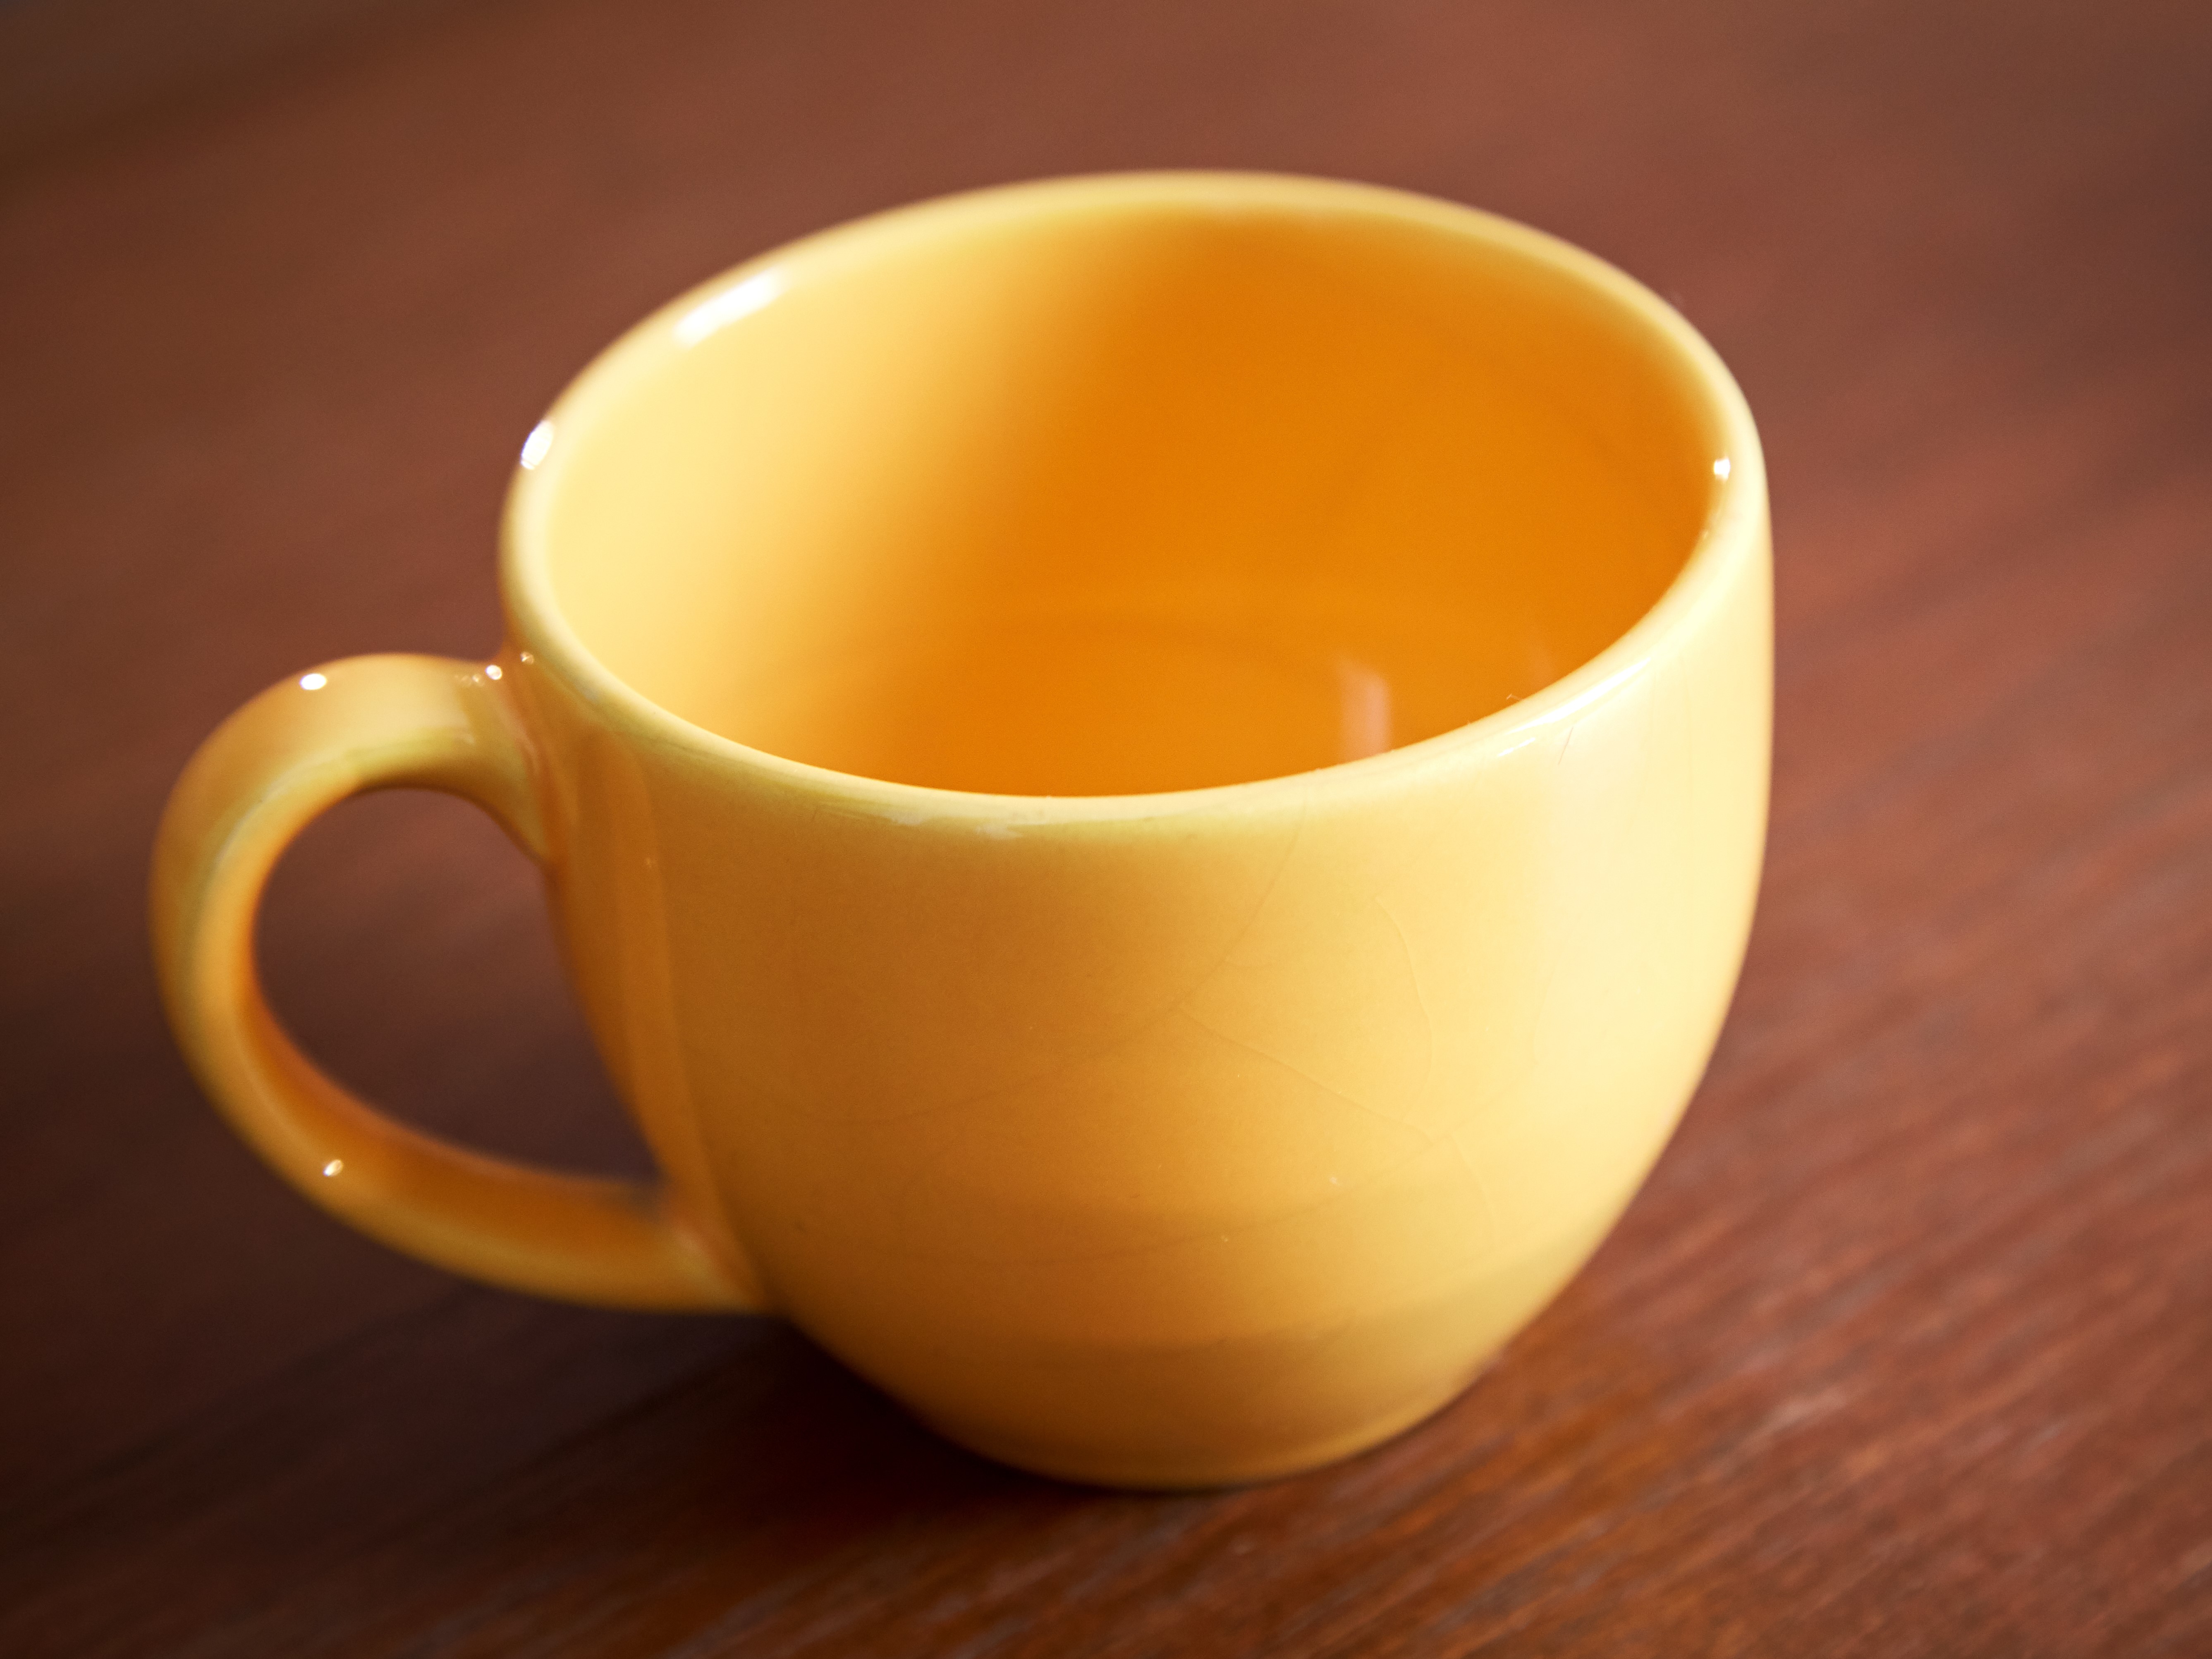 empty yellow ceramic mug on wooden table